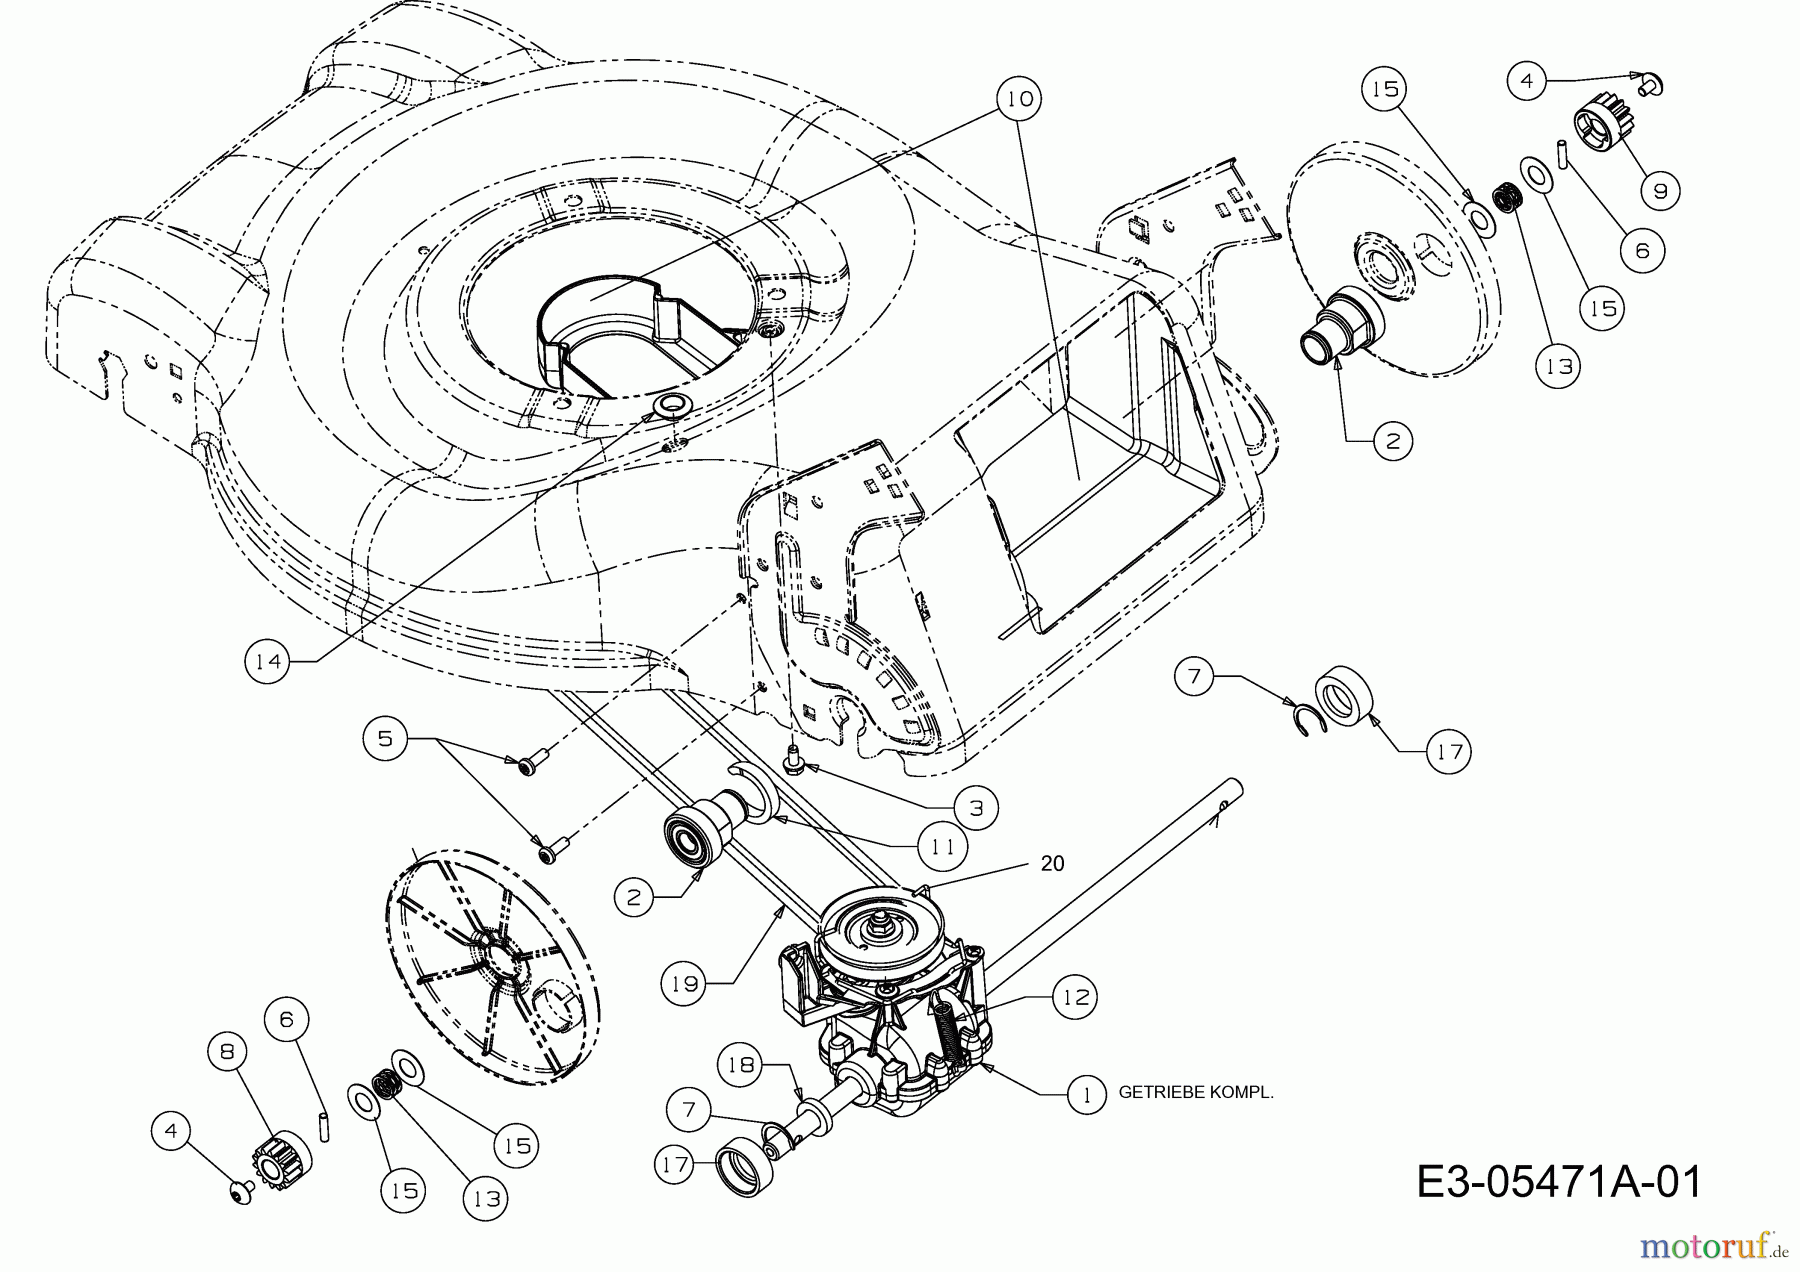  MTD Motormäher mit Antrieb SP 46 B 12D-J54J615  (2010) Getriebe